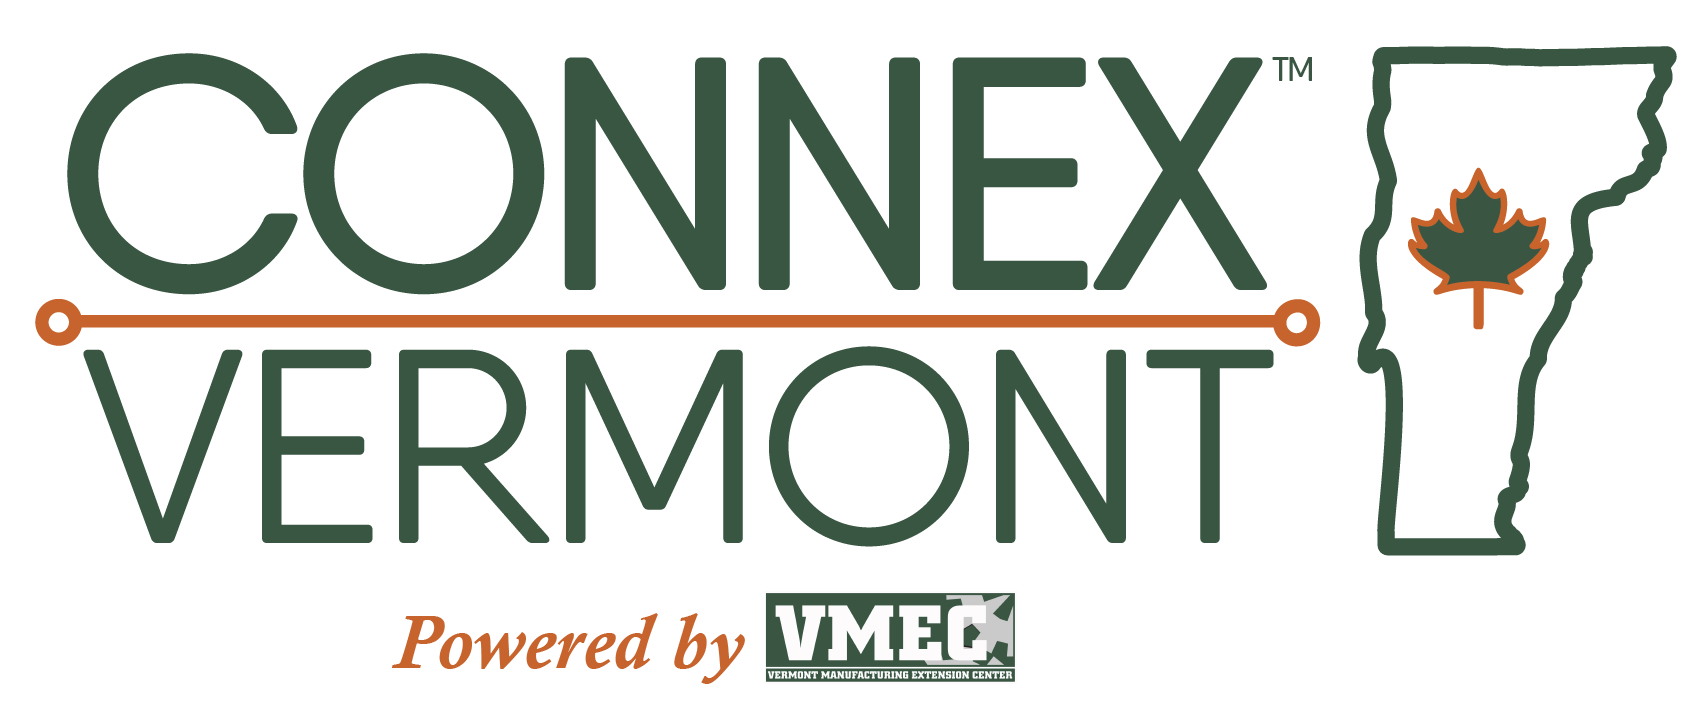 Introduction to CONNEX™ Vermont